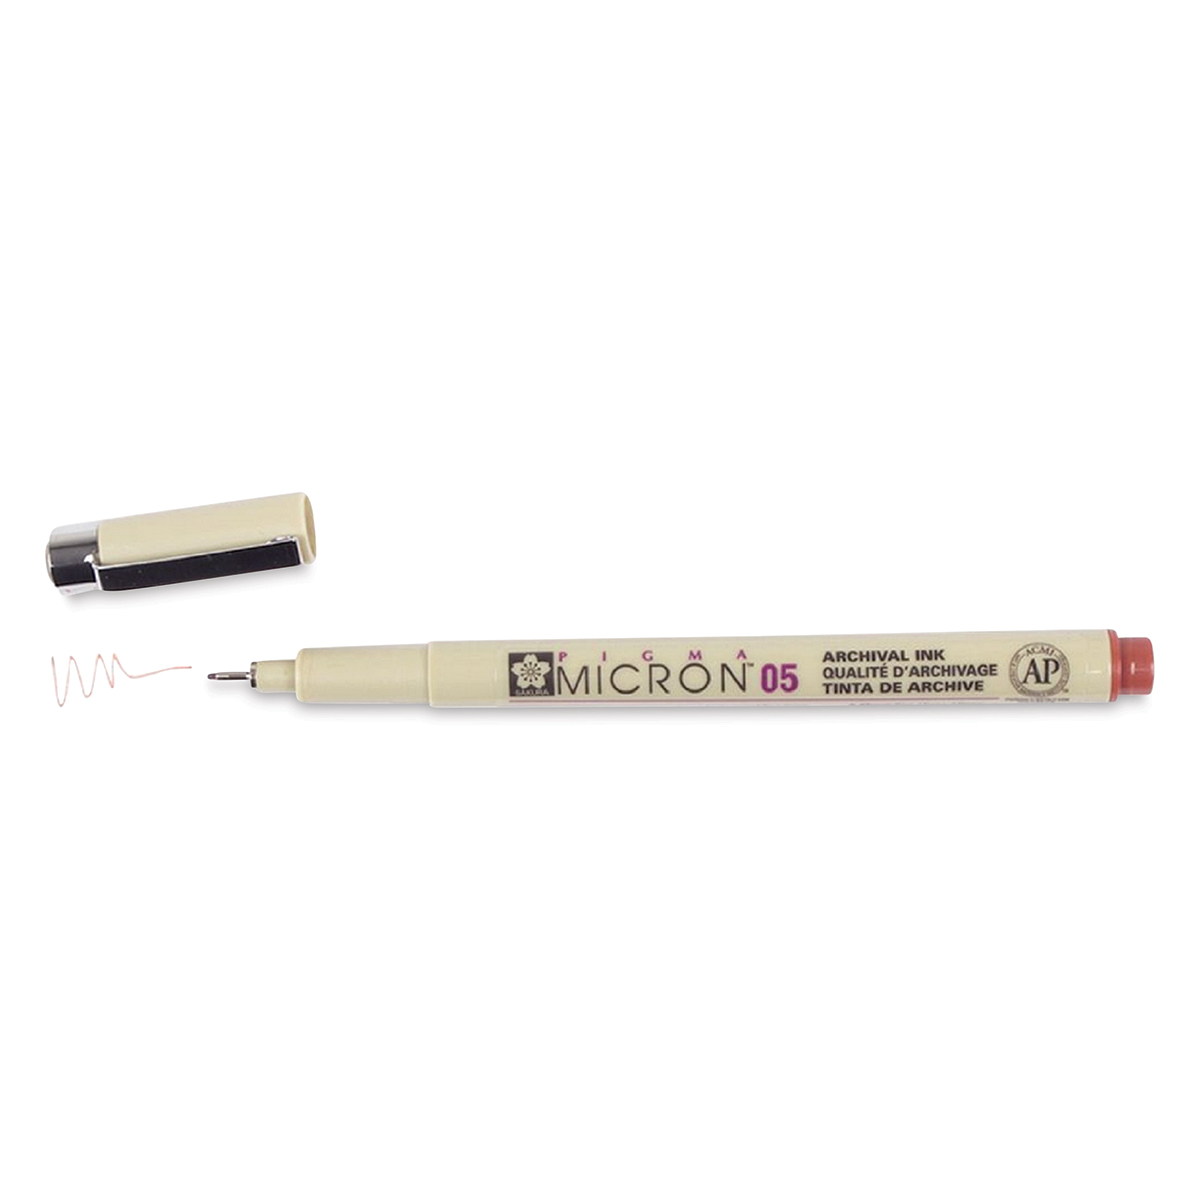 Pigma Micron Pen 05 .45mm Light Cool Gray